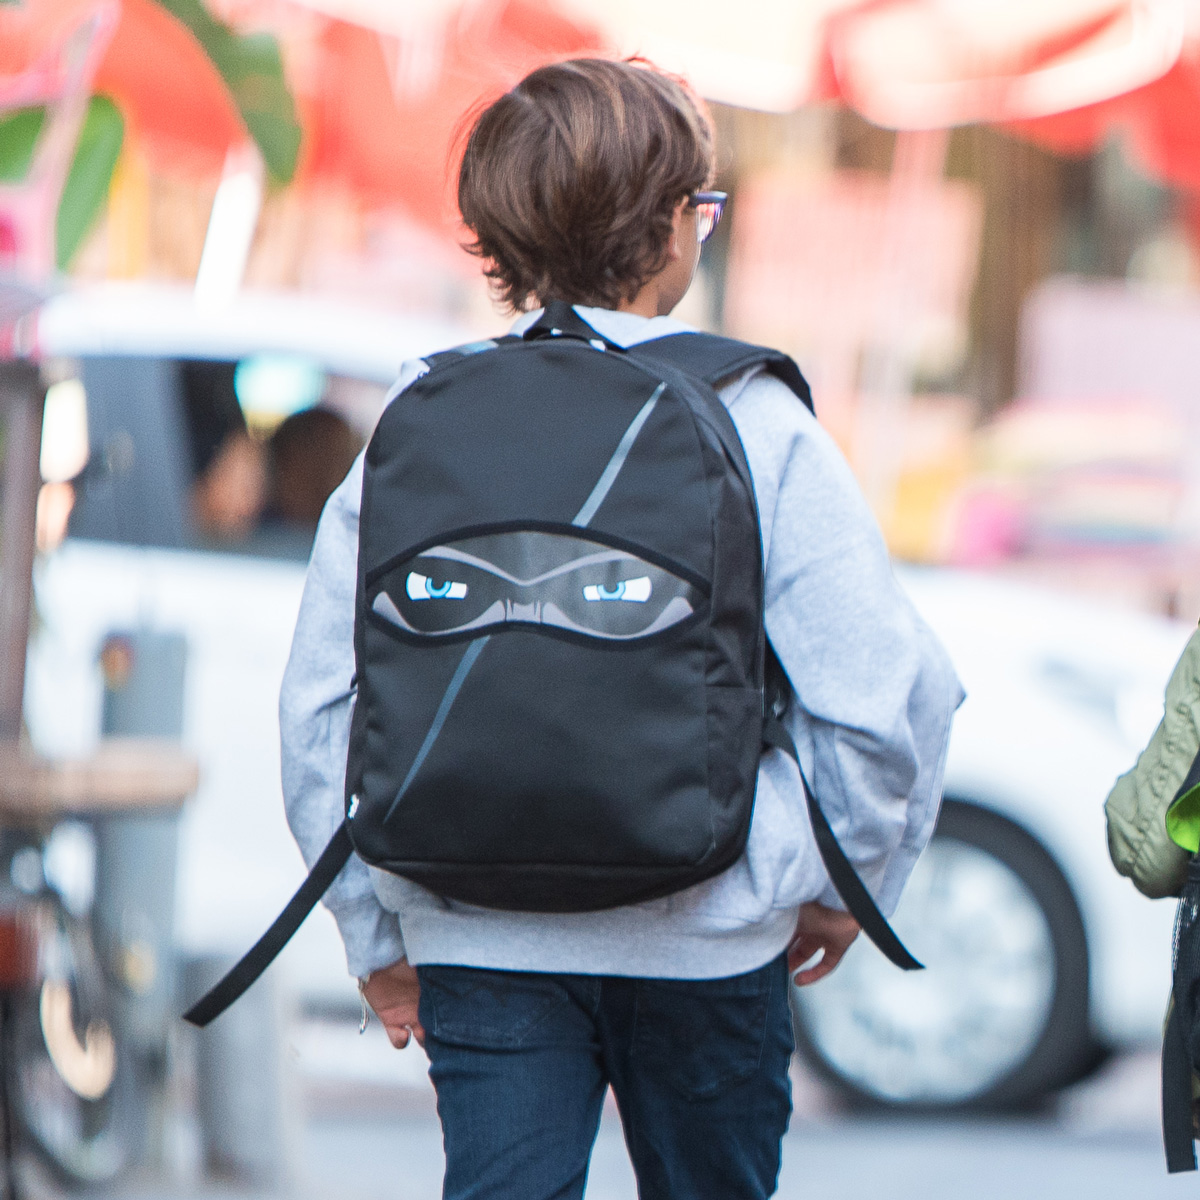 ZIPIT Ninja Backpack for Boys Elementary School & Preschool, Cute Book Bag for Kids (Black) - image 5 of 10